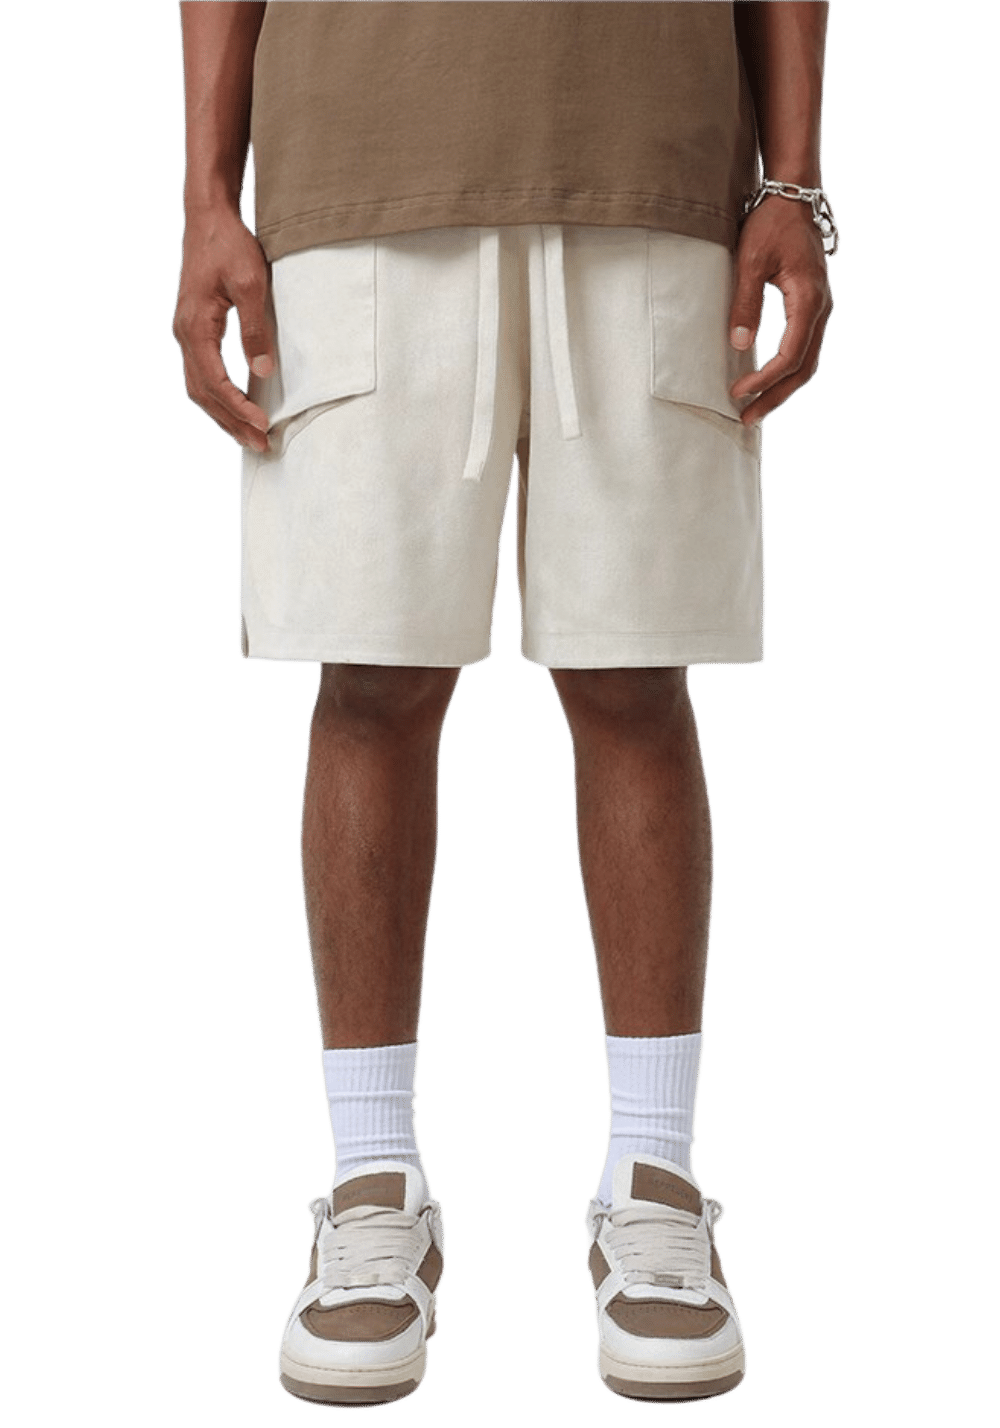 Irregular Pocket Suede Shorts - PSYLOS 1, Irregular Pocket Suede Shorts, Shorts, Boneless, PSYLOS 1